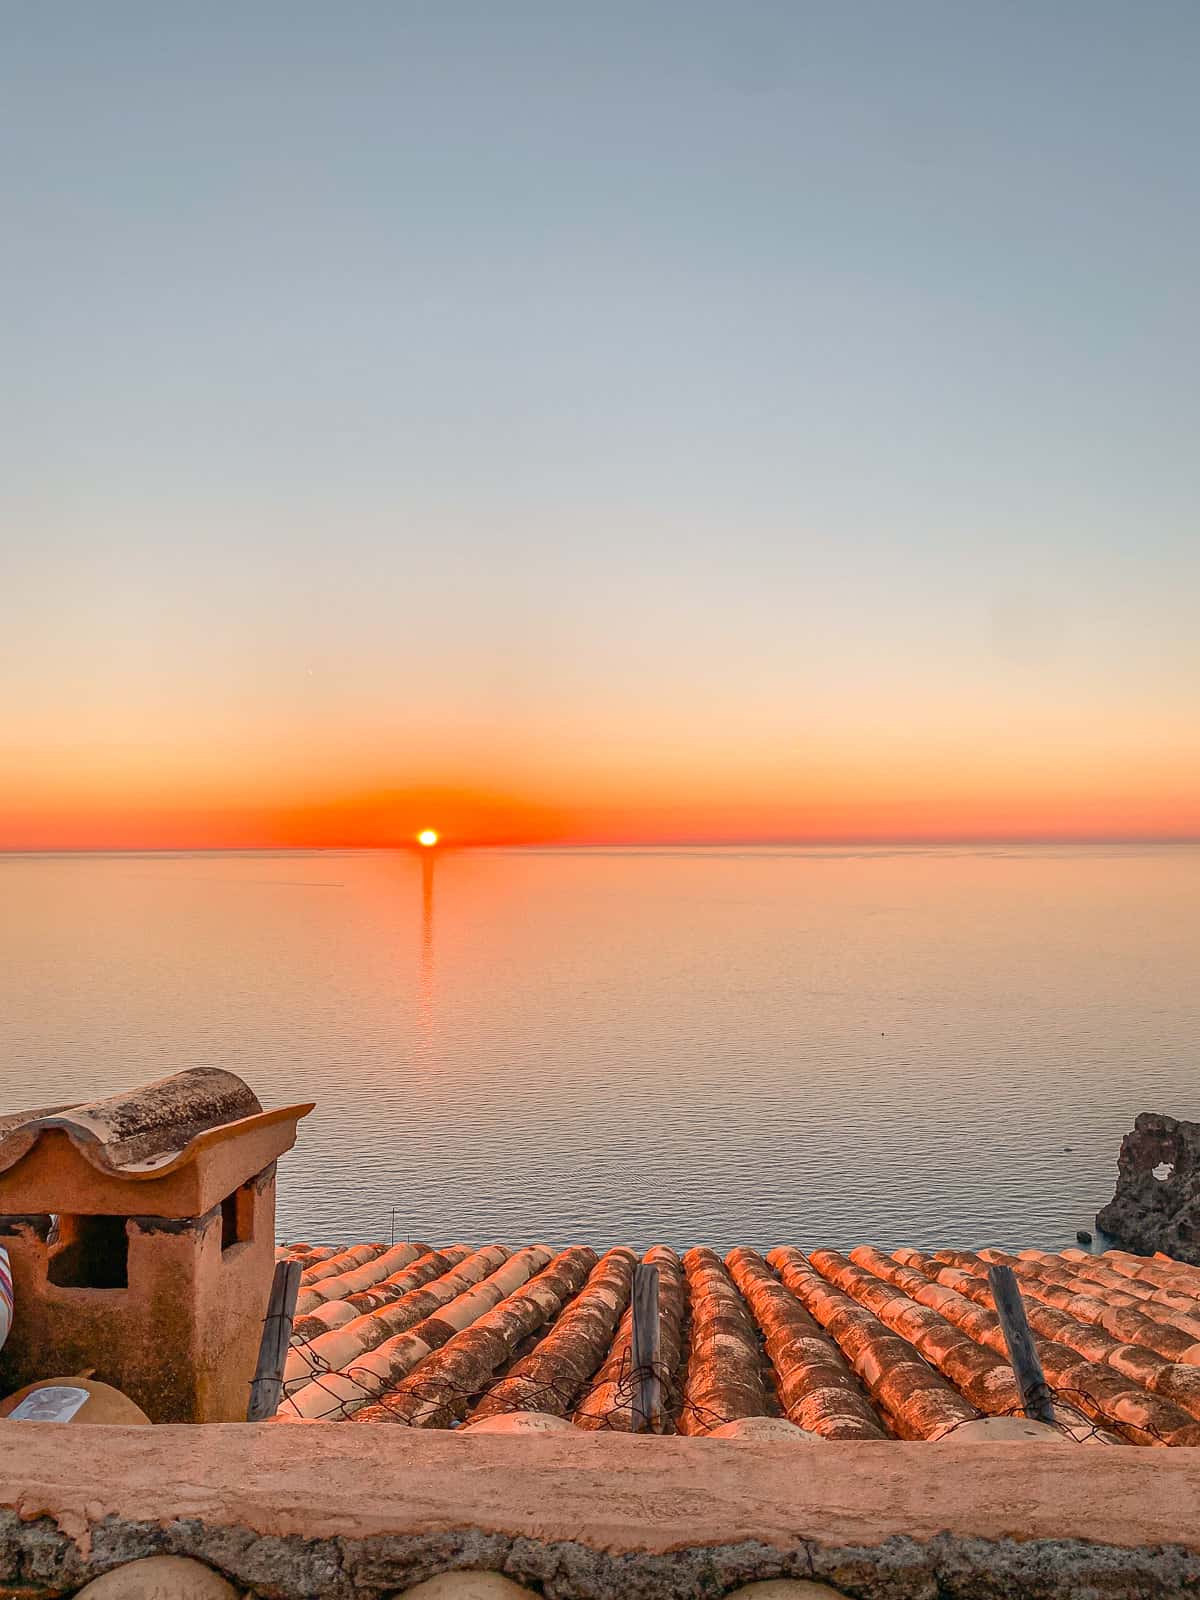 A beautiful sunset on the Mediterranean Sea